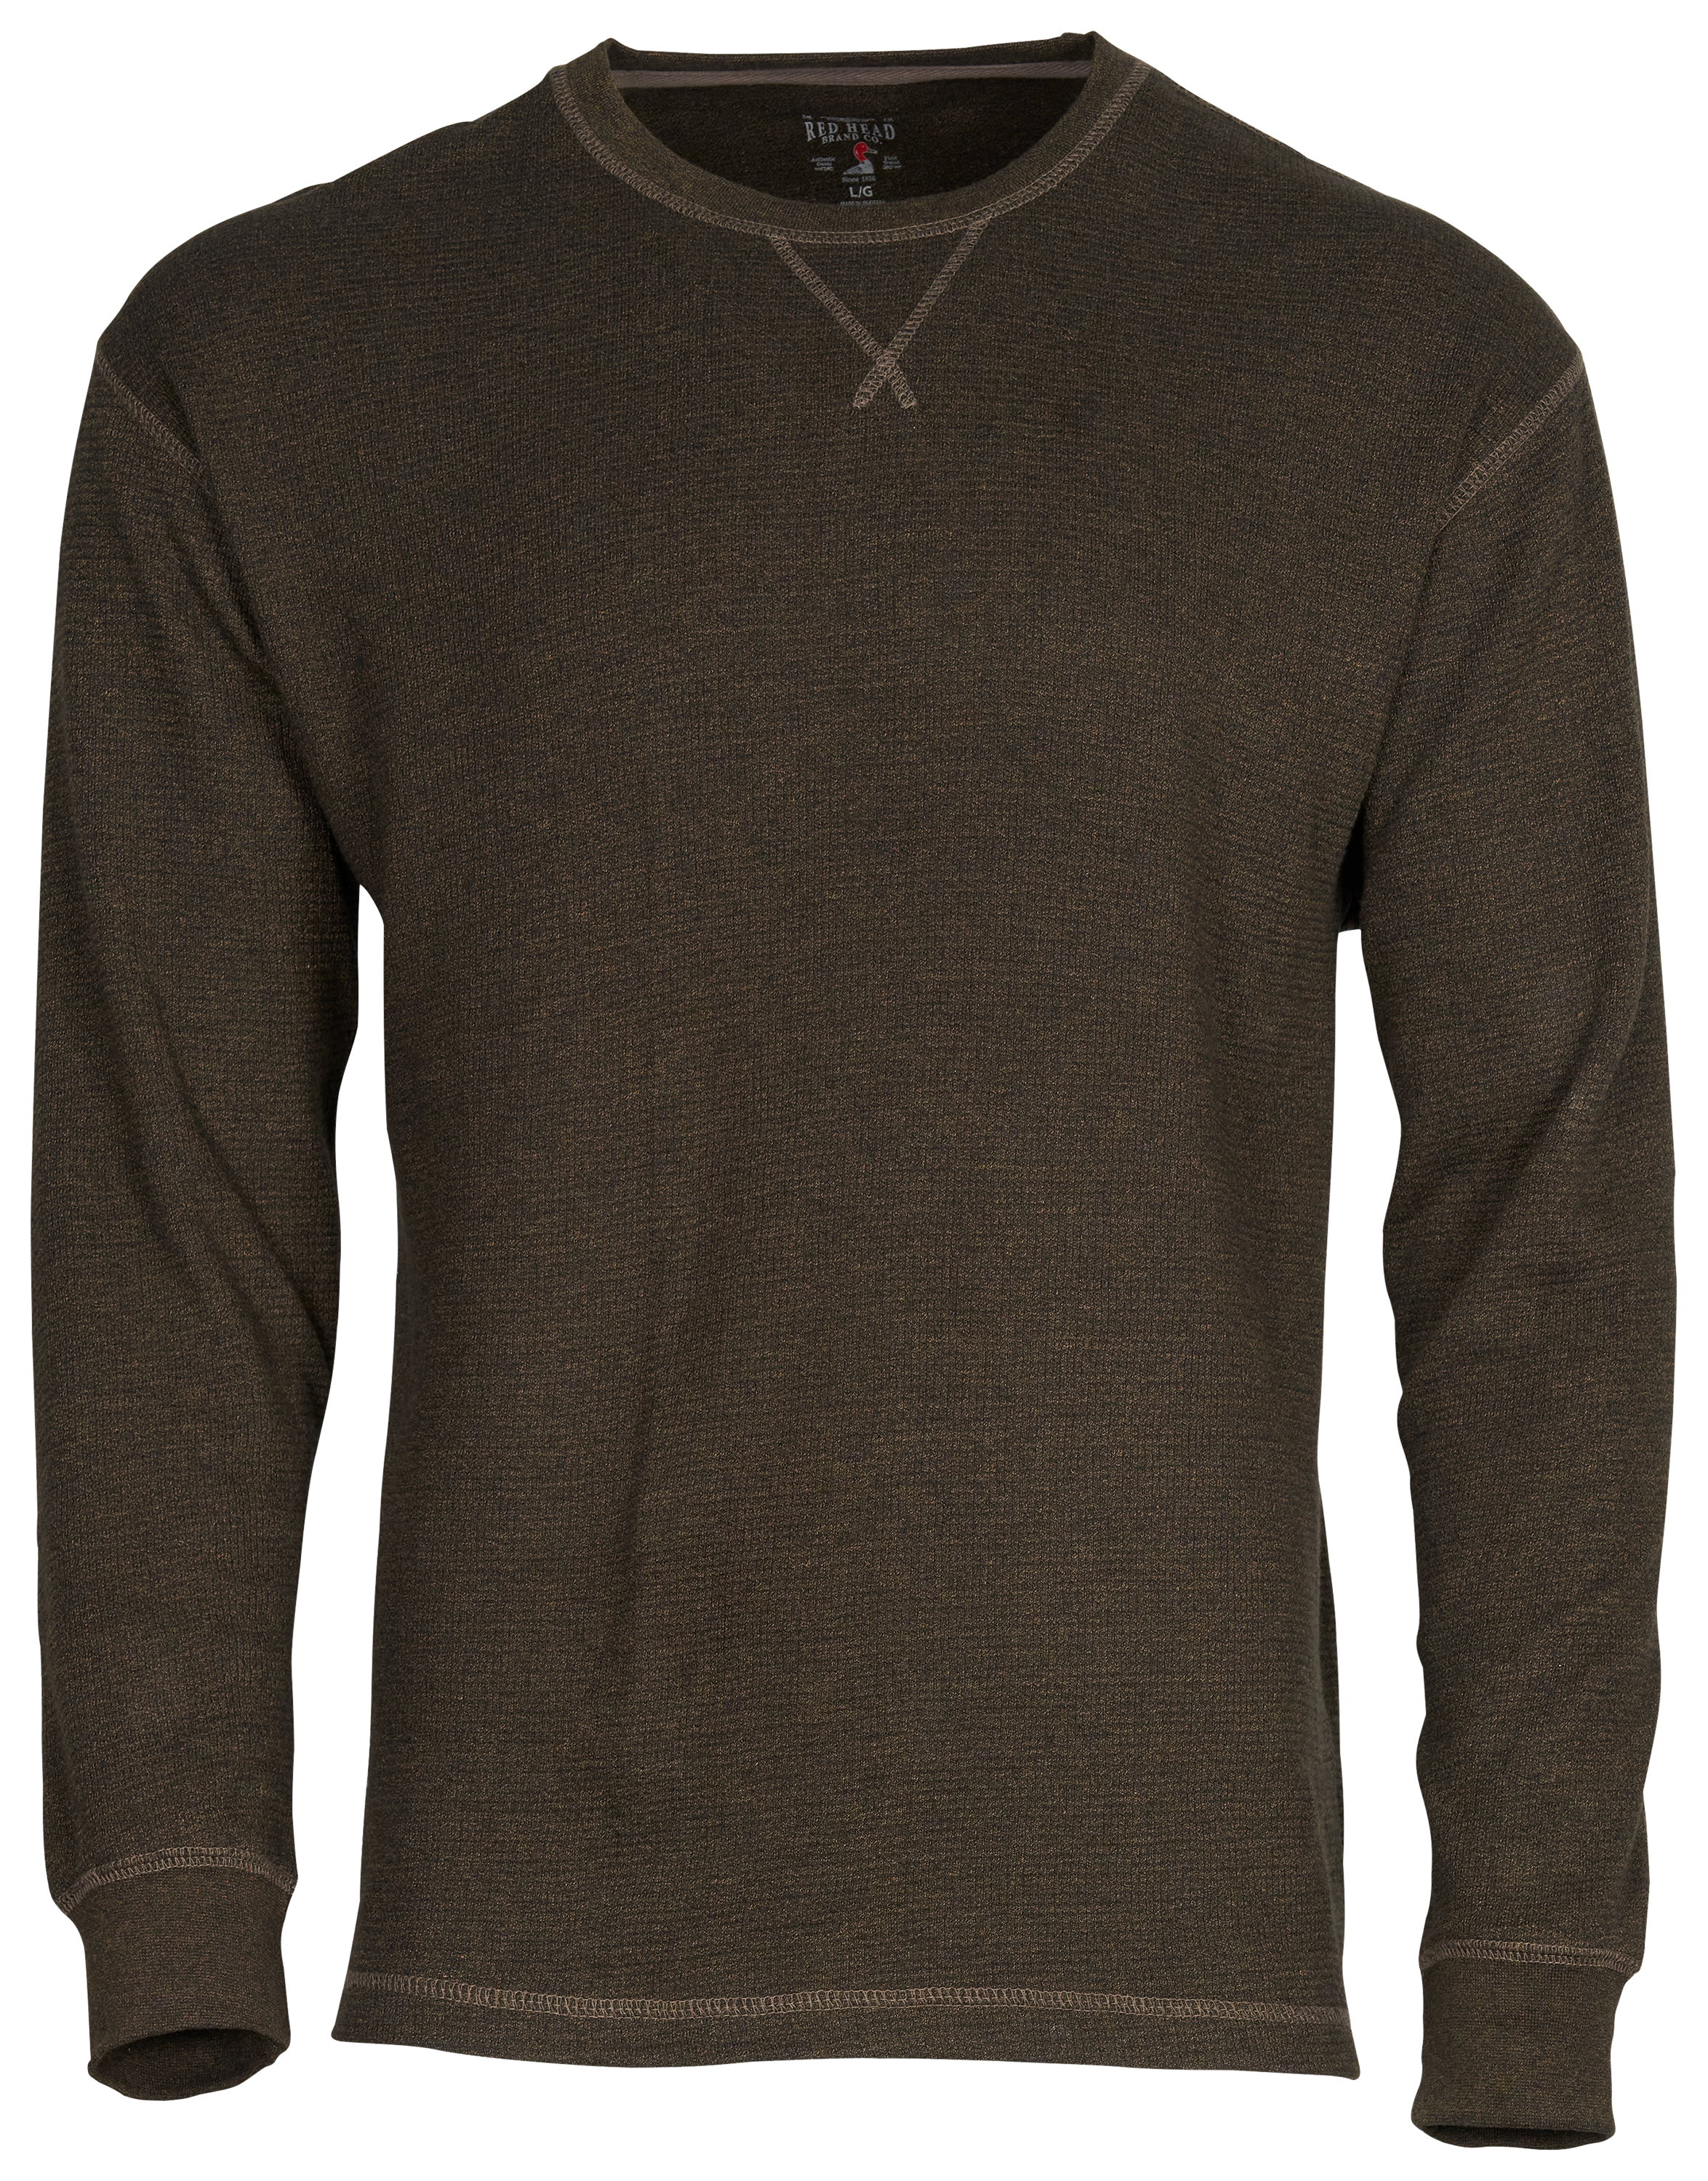 Mens Crew Neck Sweatshirt  Iron Mountain Workwear – Official Iron